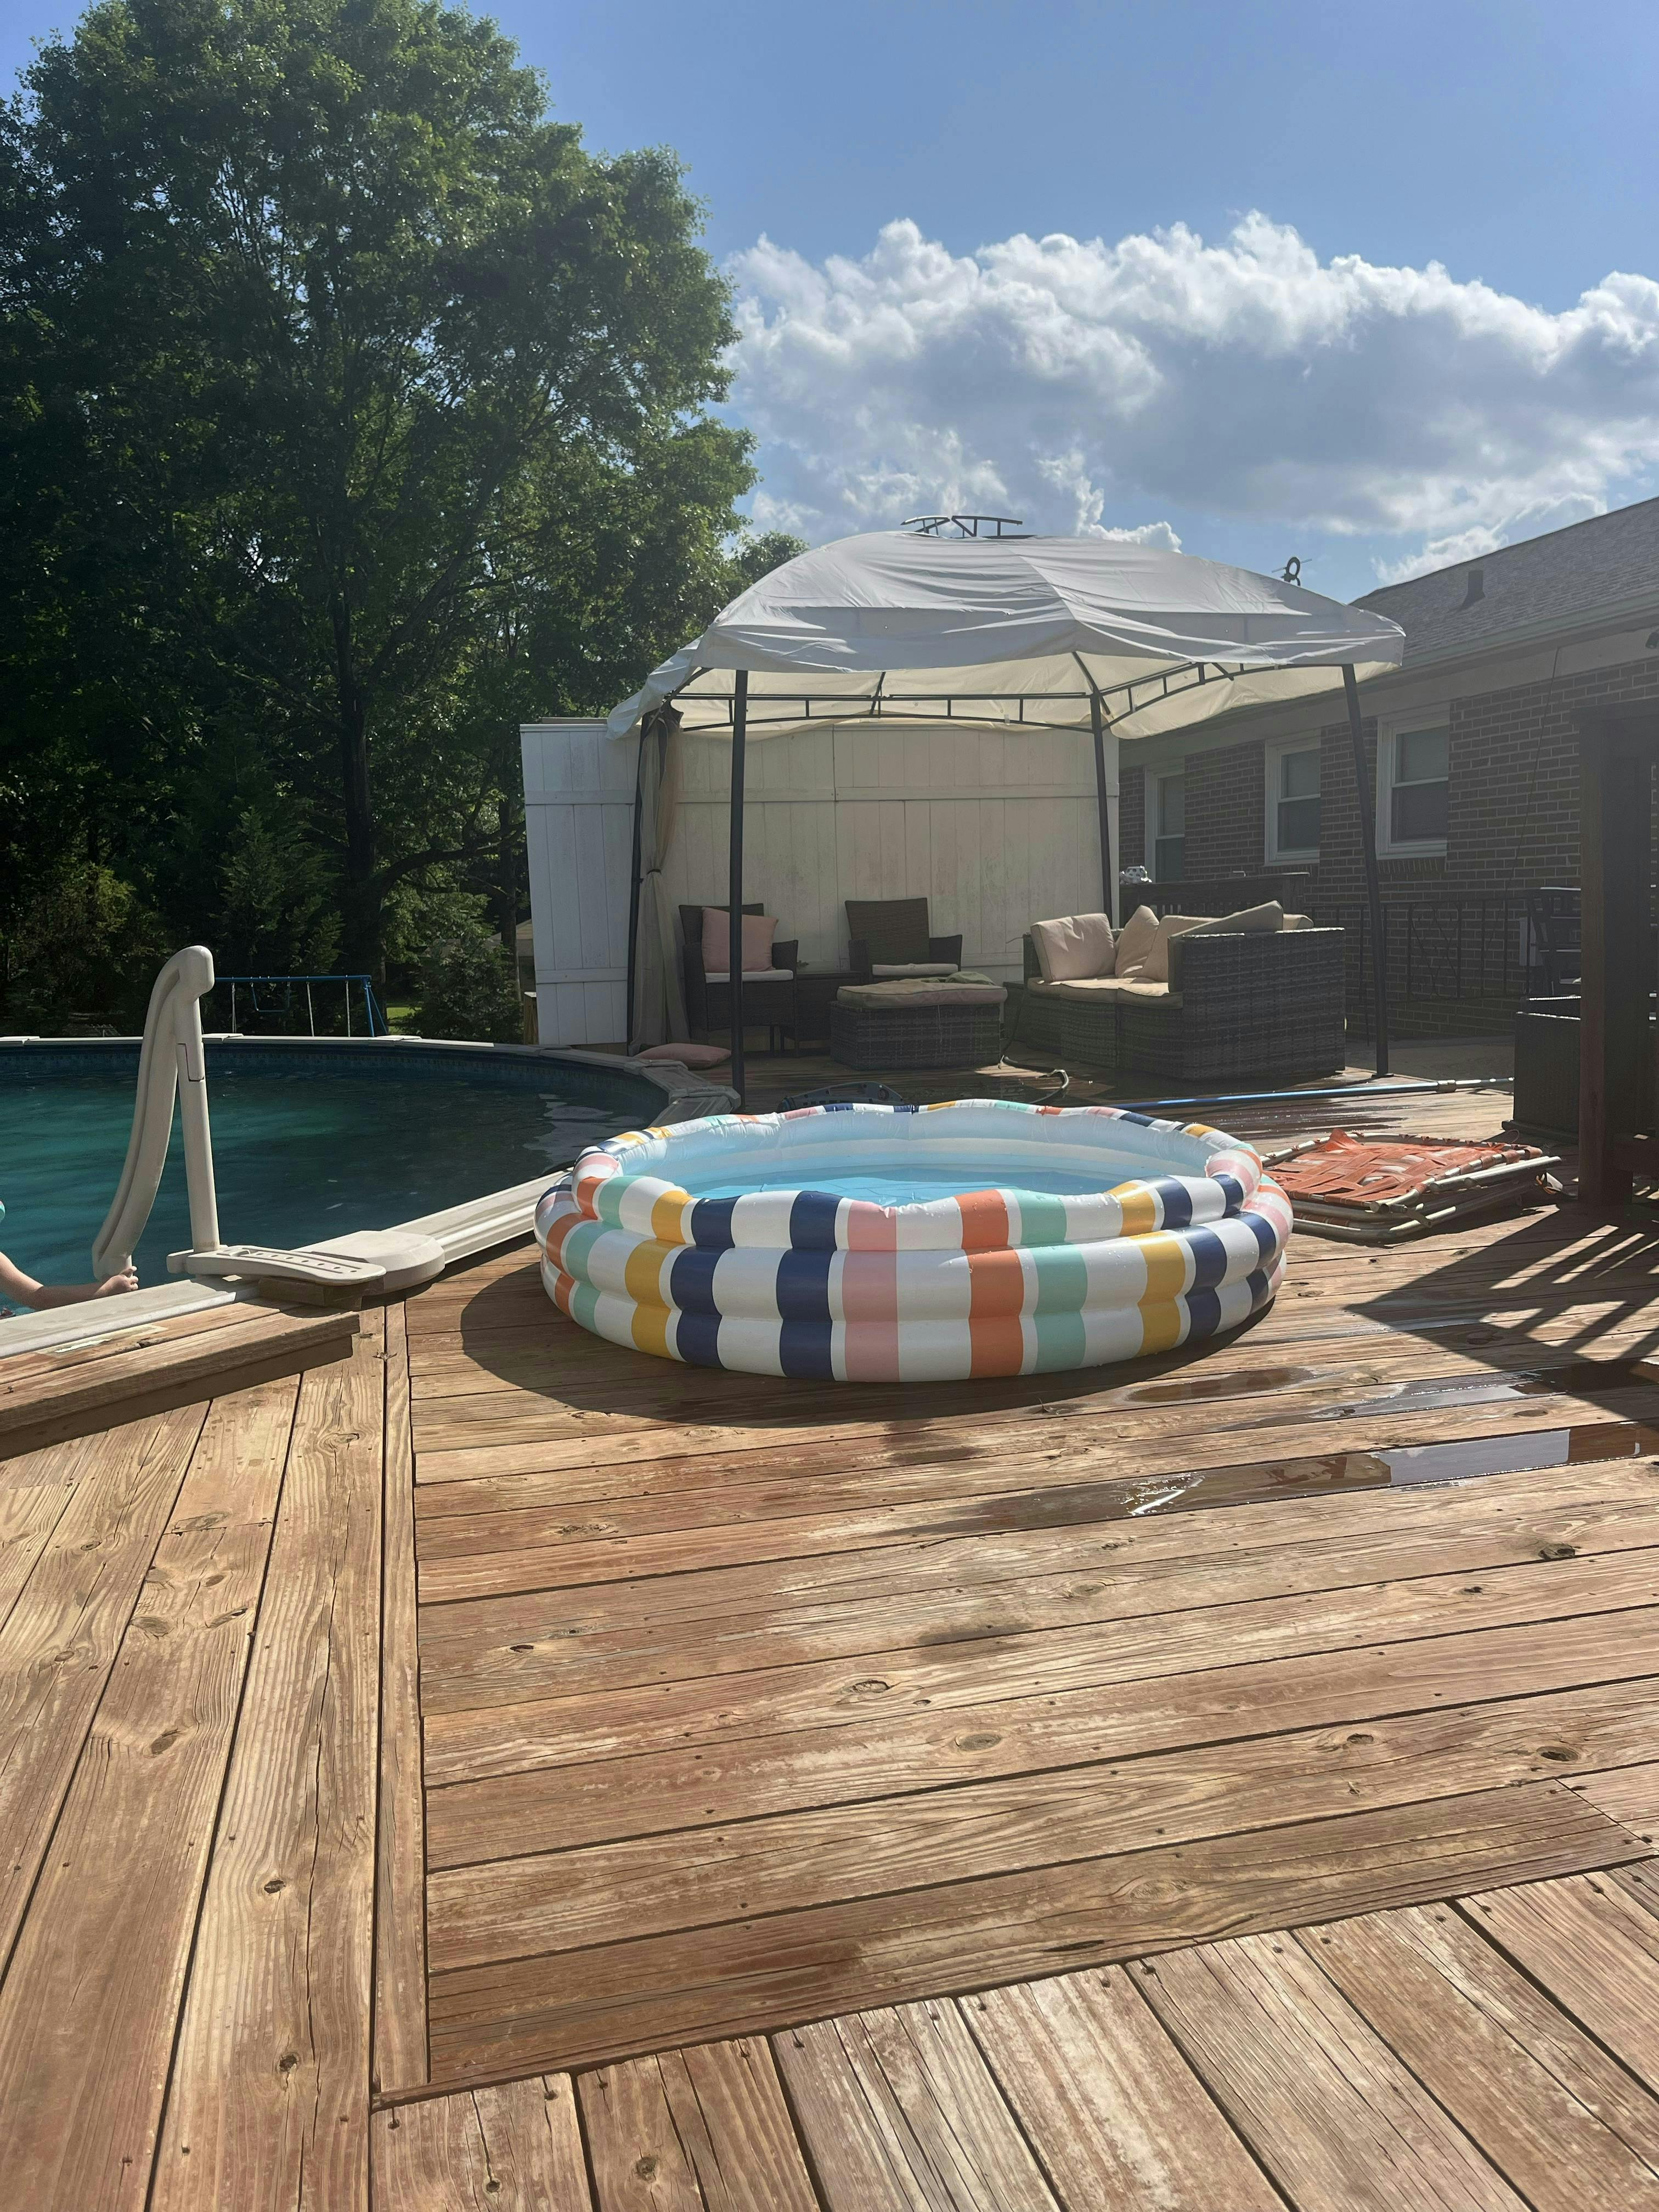 Backyard pool play space